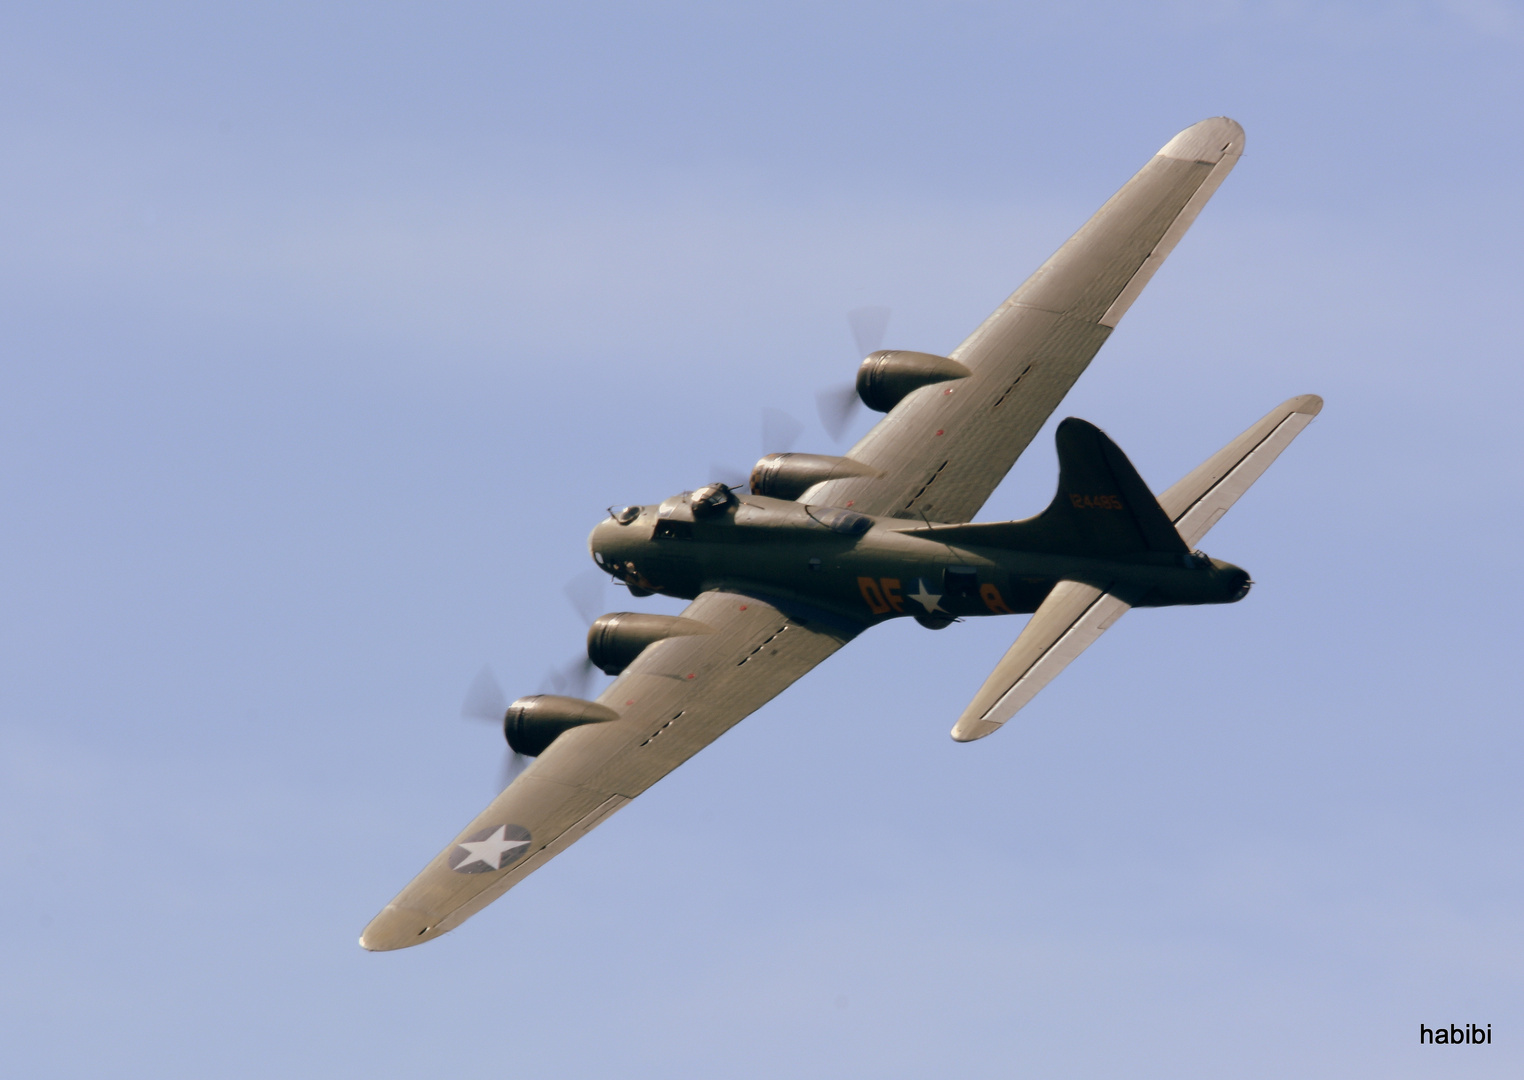 B-17 G